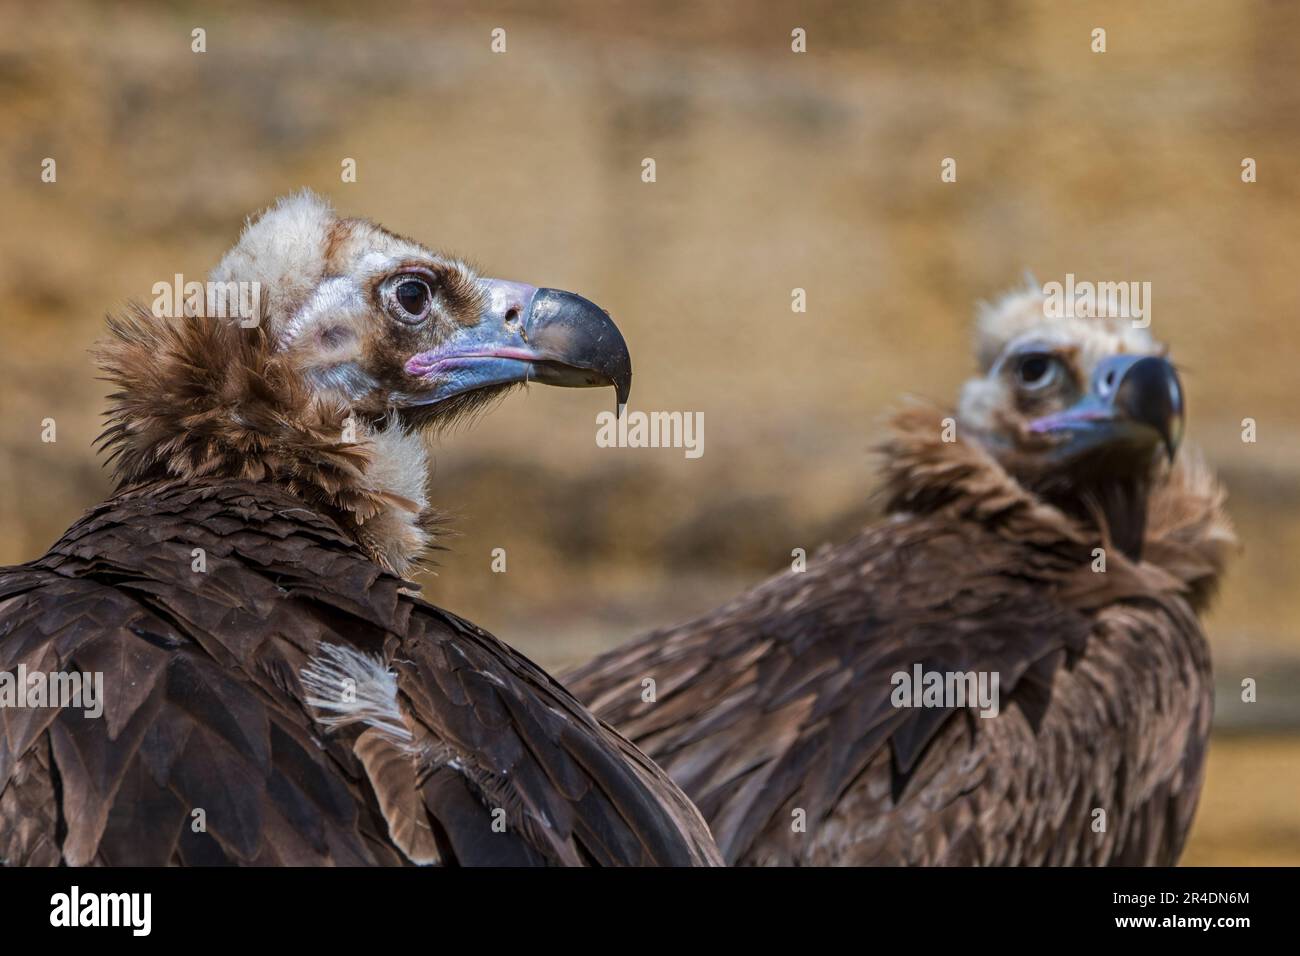 Cinereous vulture / monk vulture / Eurasian black vulture (Aegypius monachus), close-up portrait of couple in rock face Stock Photo